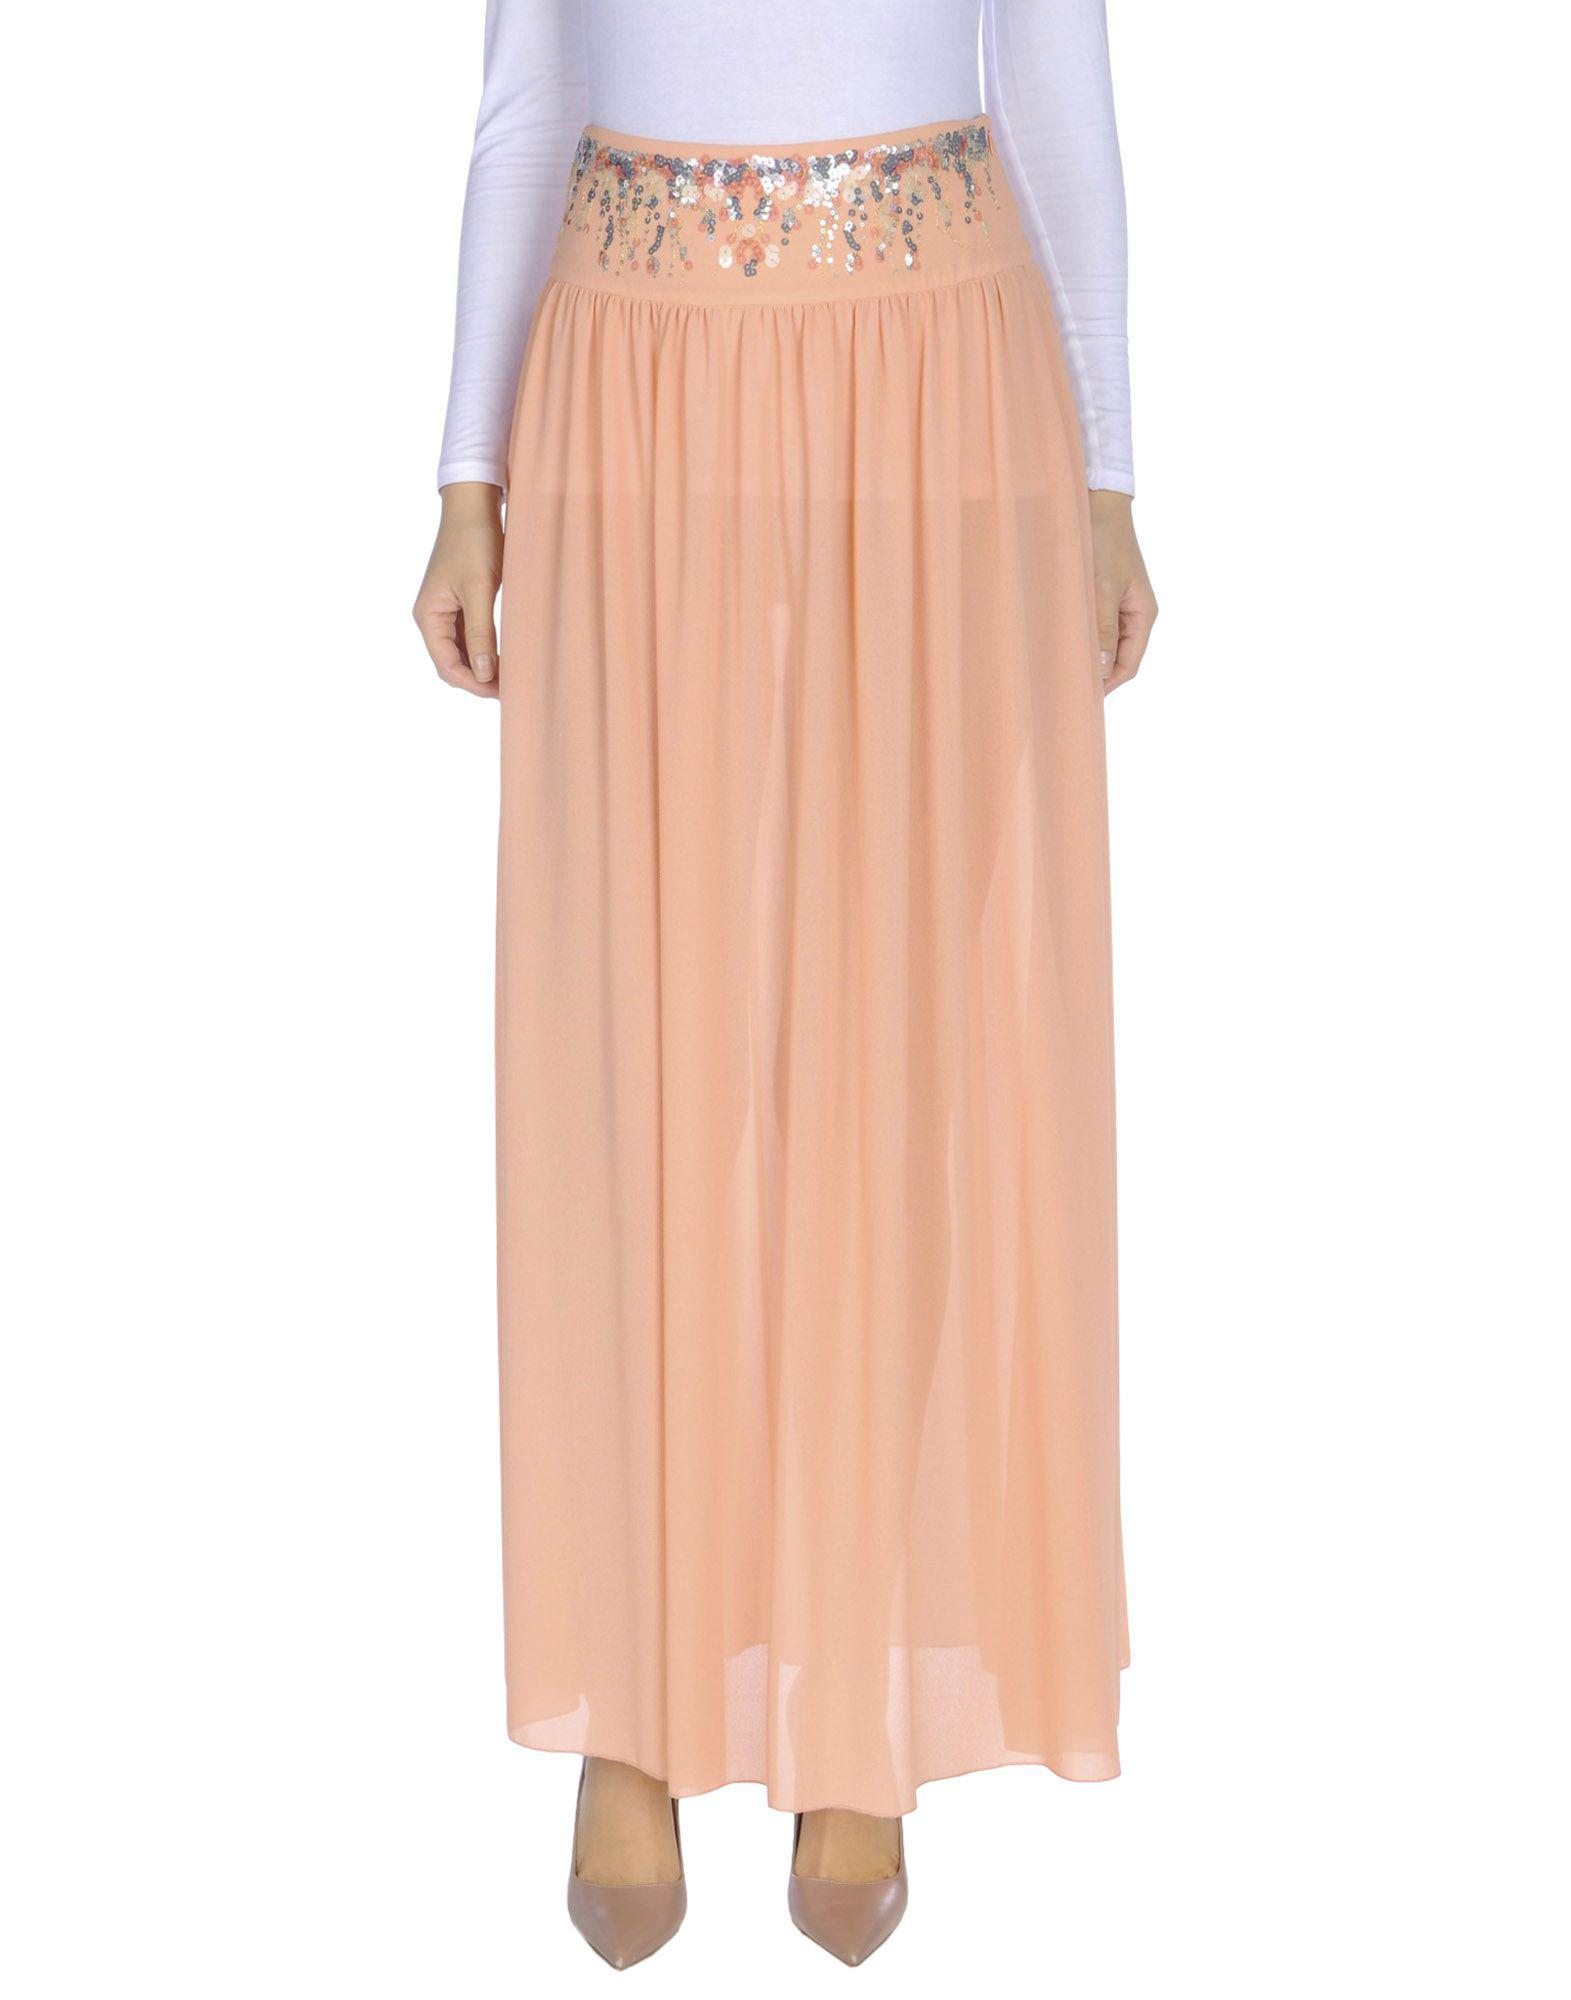 Lyst - Pinko Long Skirt in Pink